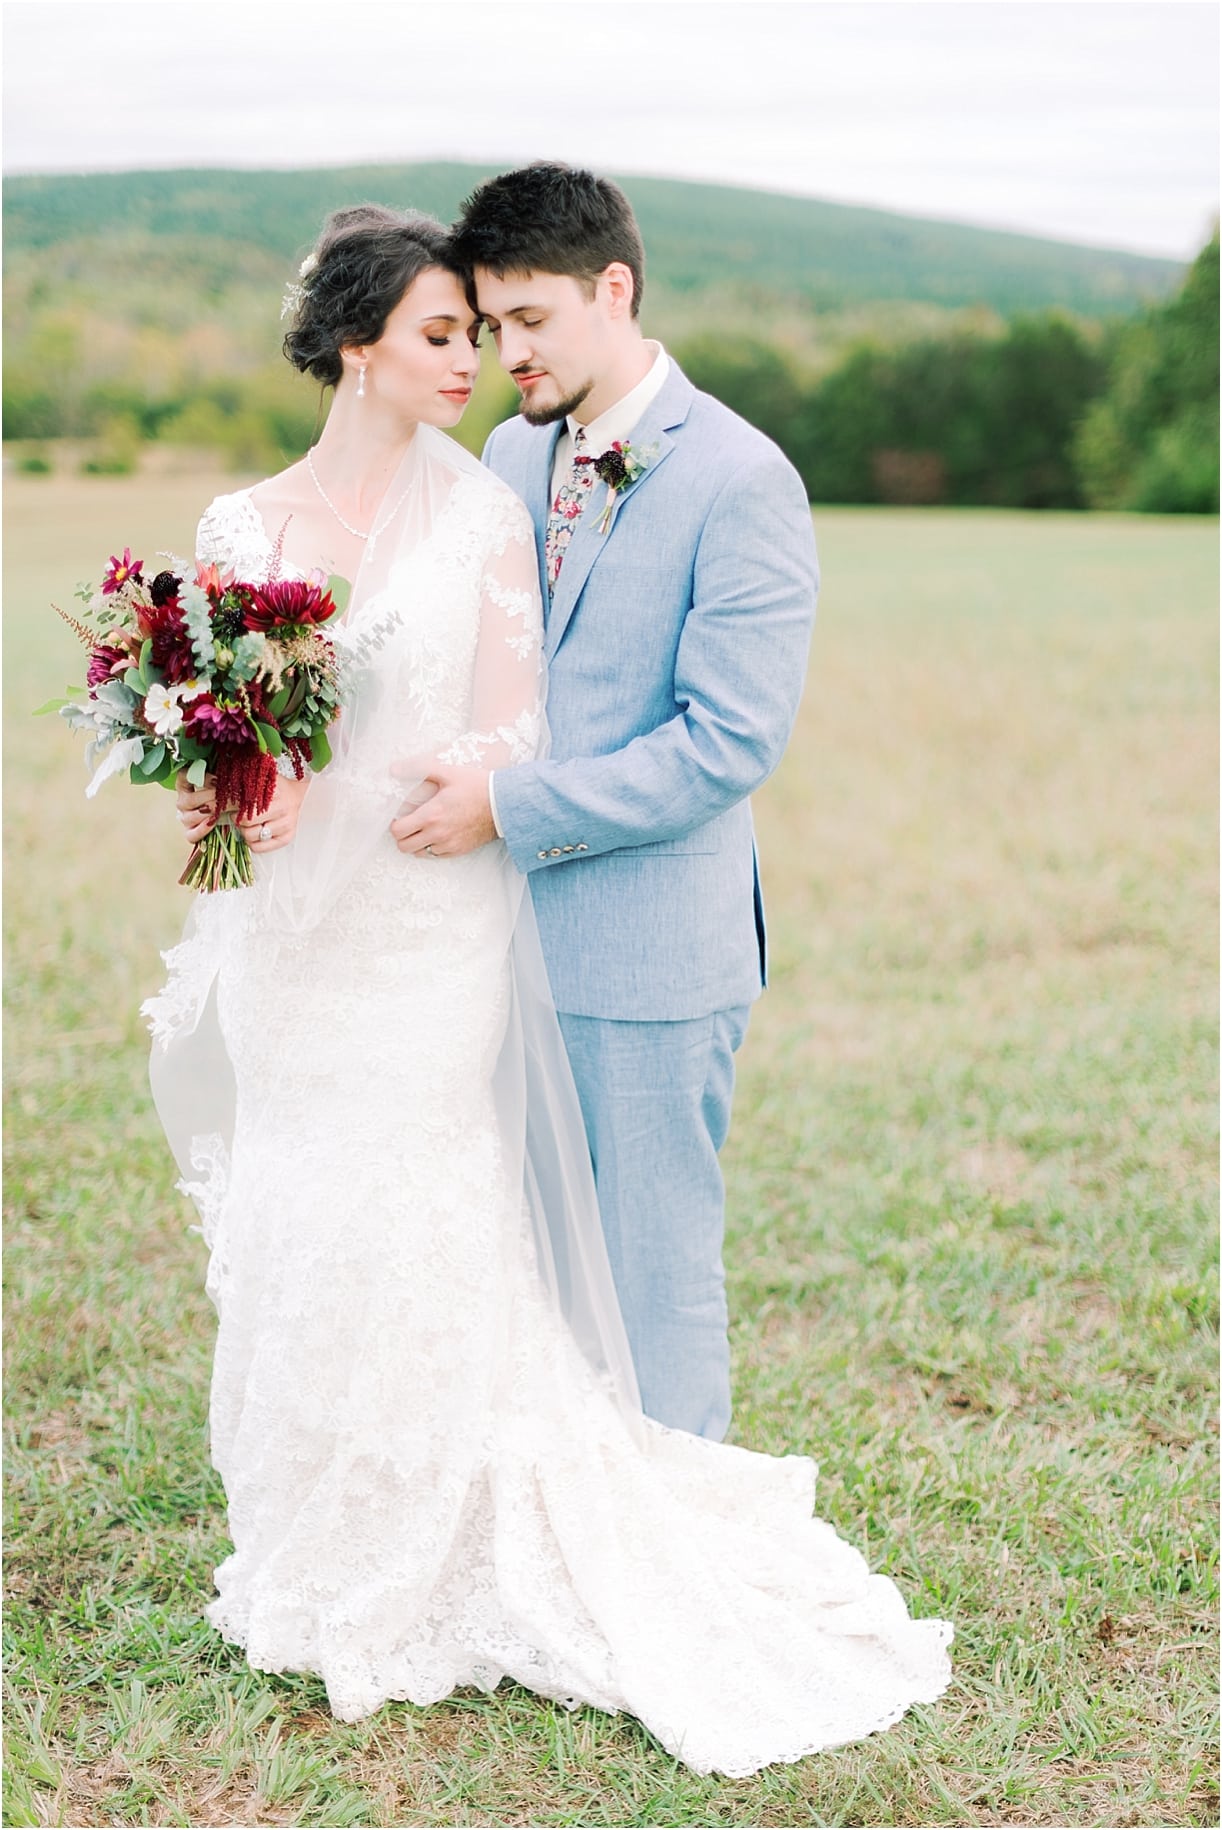 Dusty Blue Wedding Color Palette | Hill City Bride Virginia Weddings Wedding Blog | Something Blue Groom